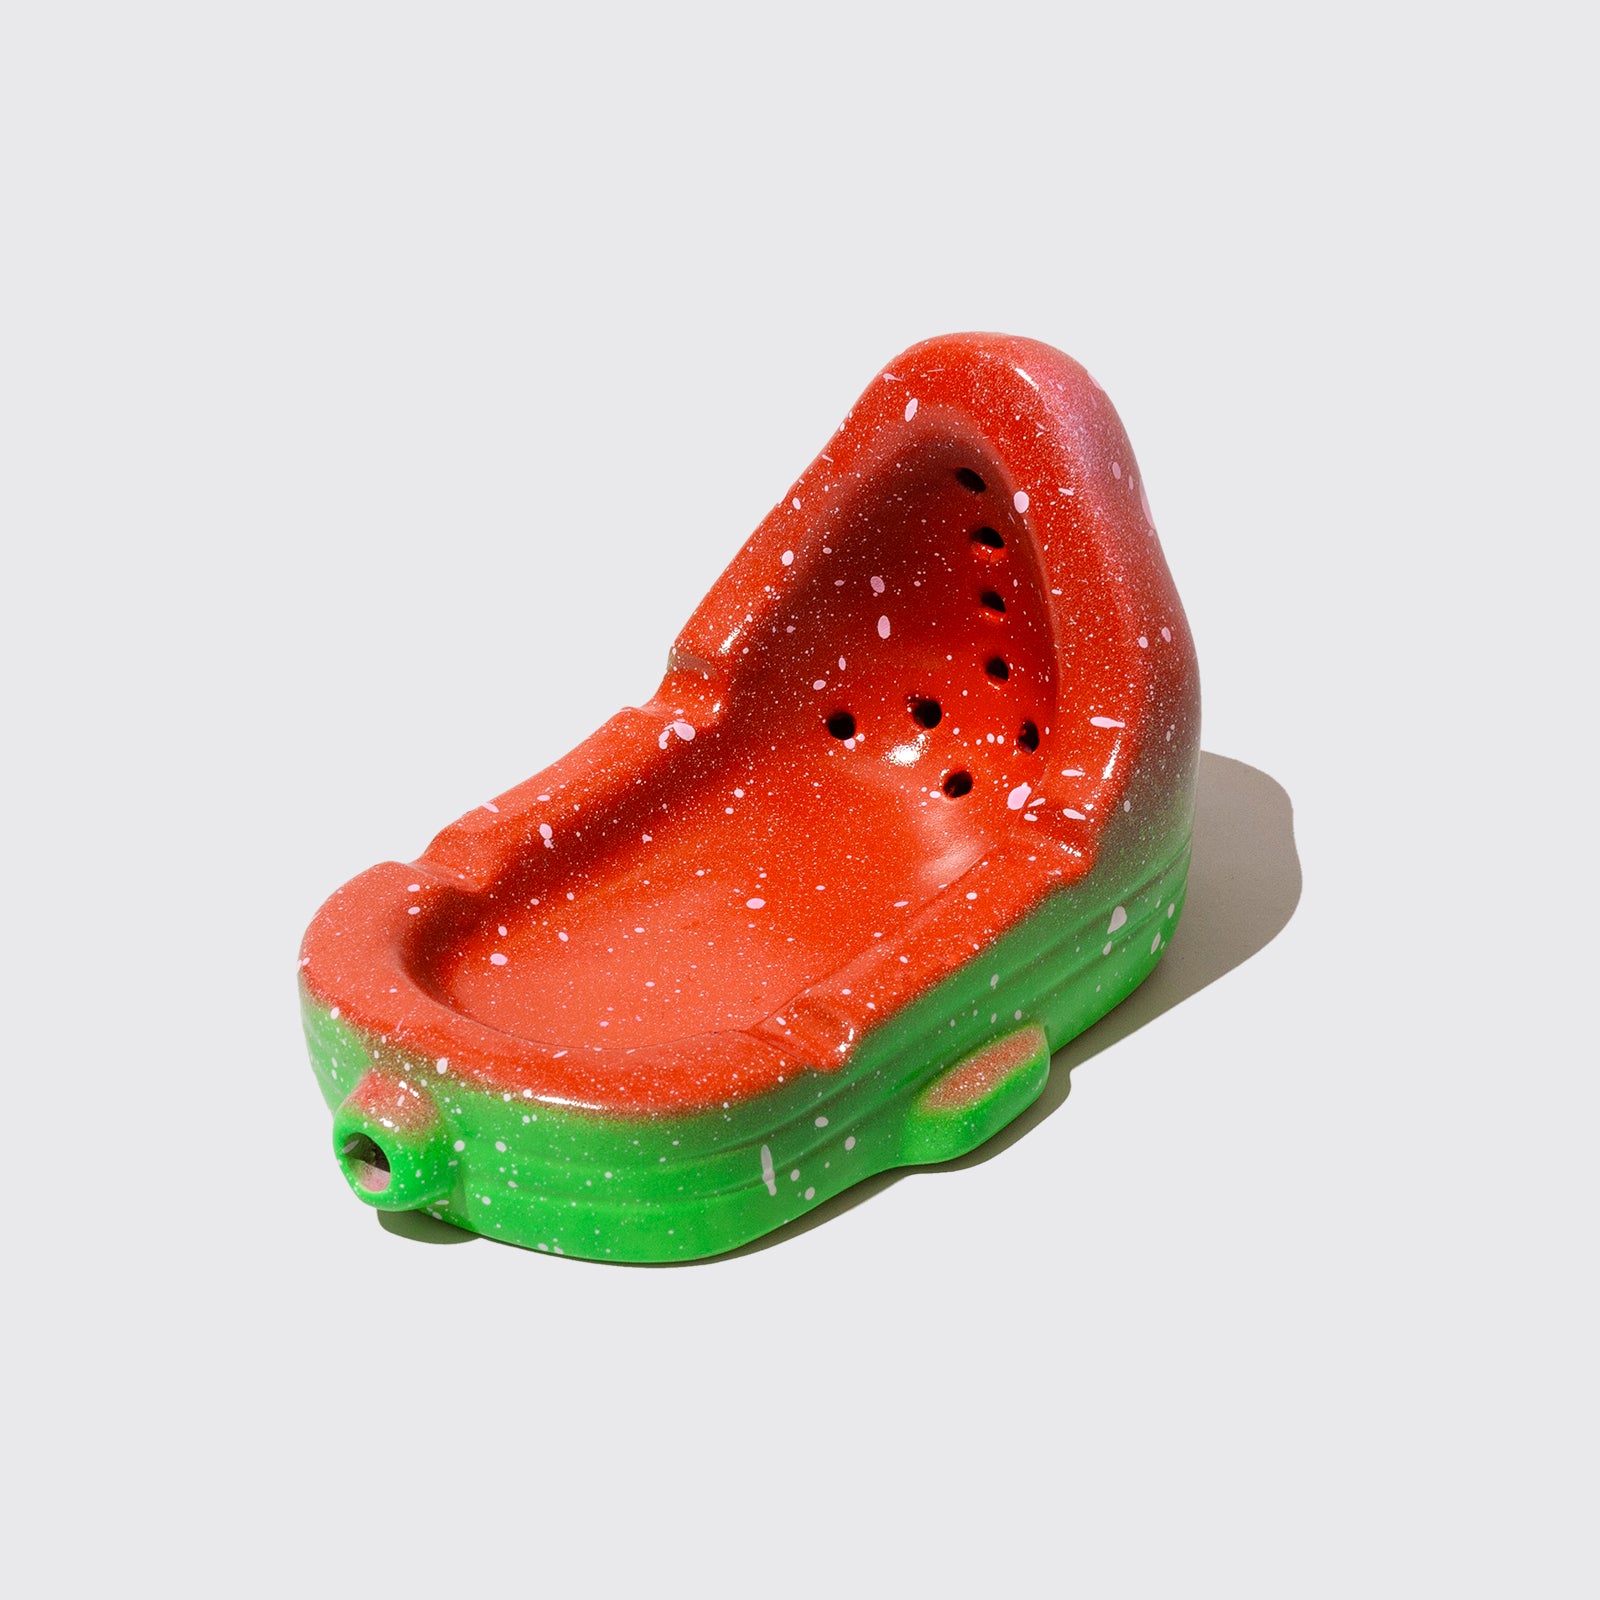 Fountain Ceramic Incense Holder & Ashtray - 1 of 1 Edition (Watermelon)